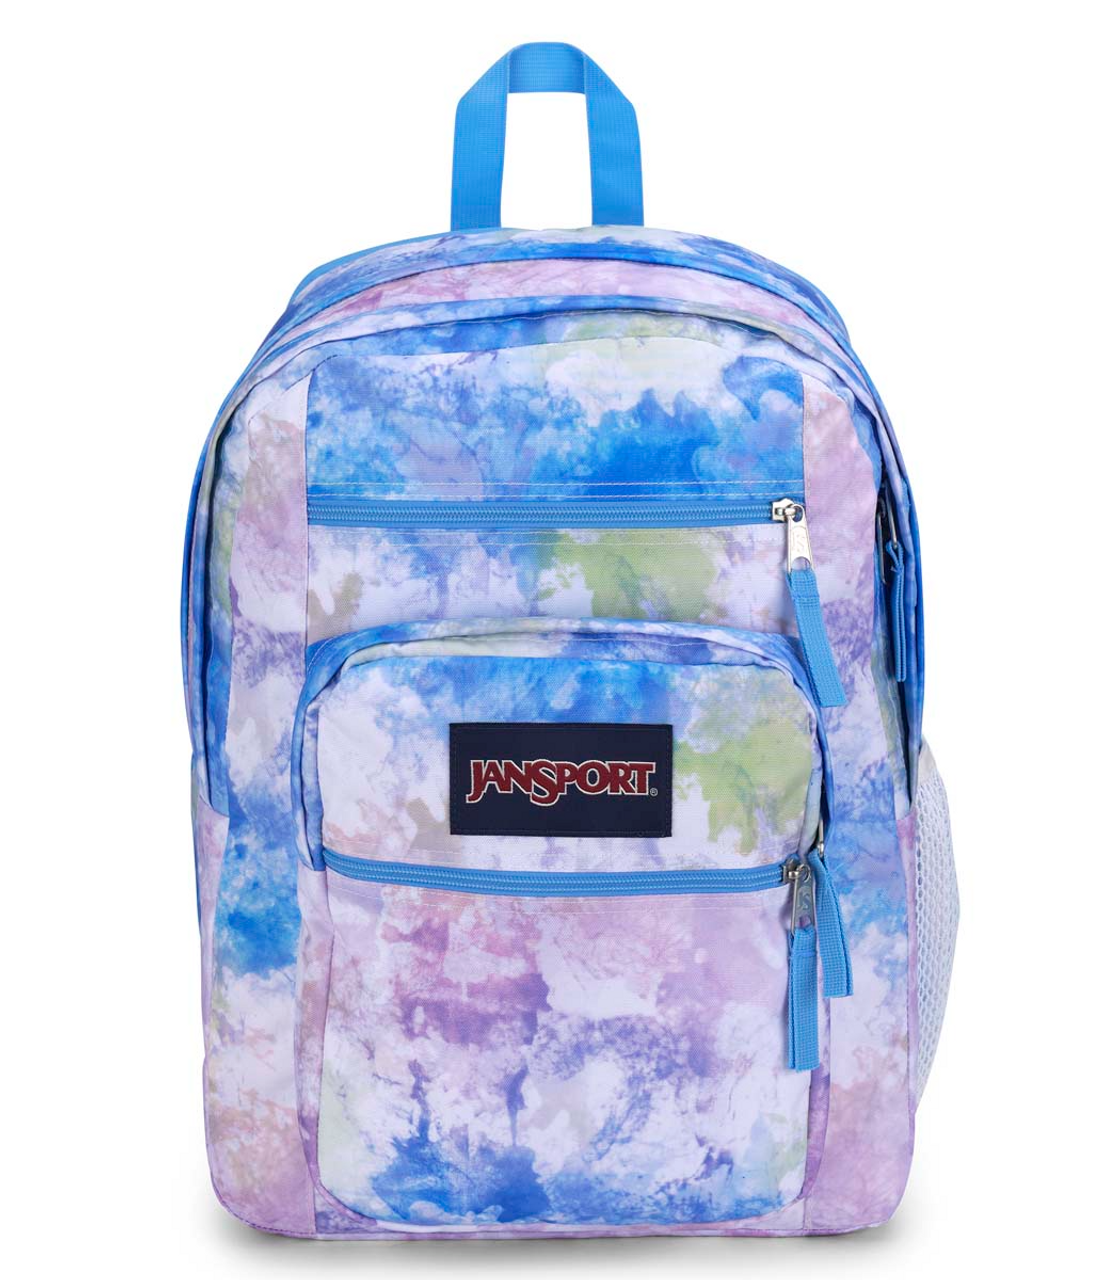 Big Student Backpack - Batik Outdoor Wash Ramsey 